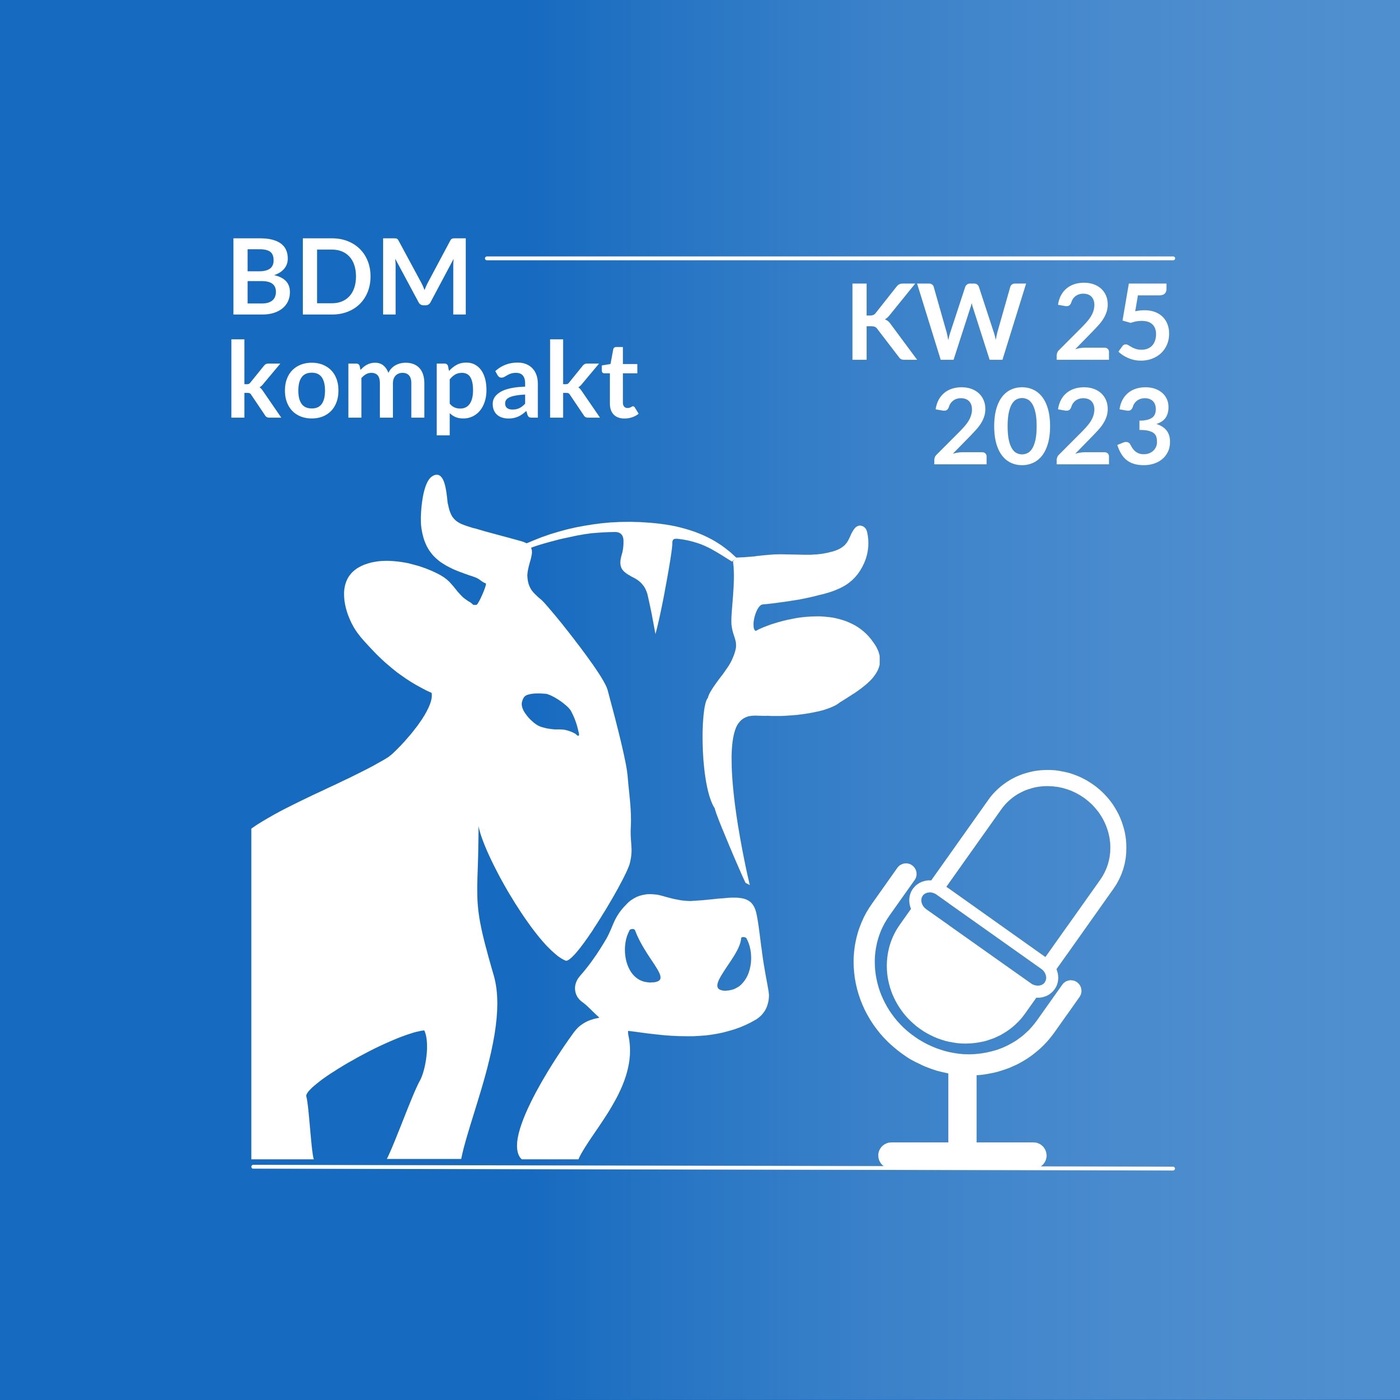 BDM kompakt KW 25/2023